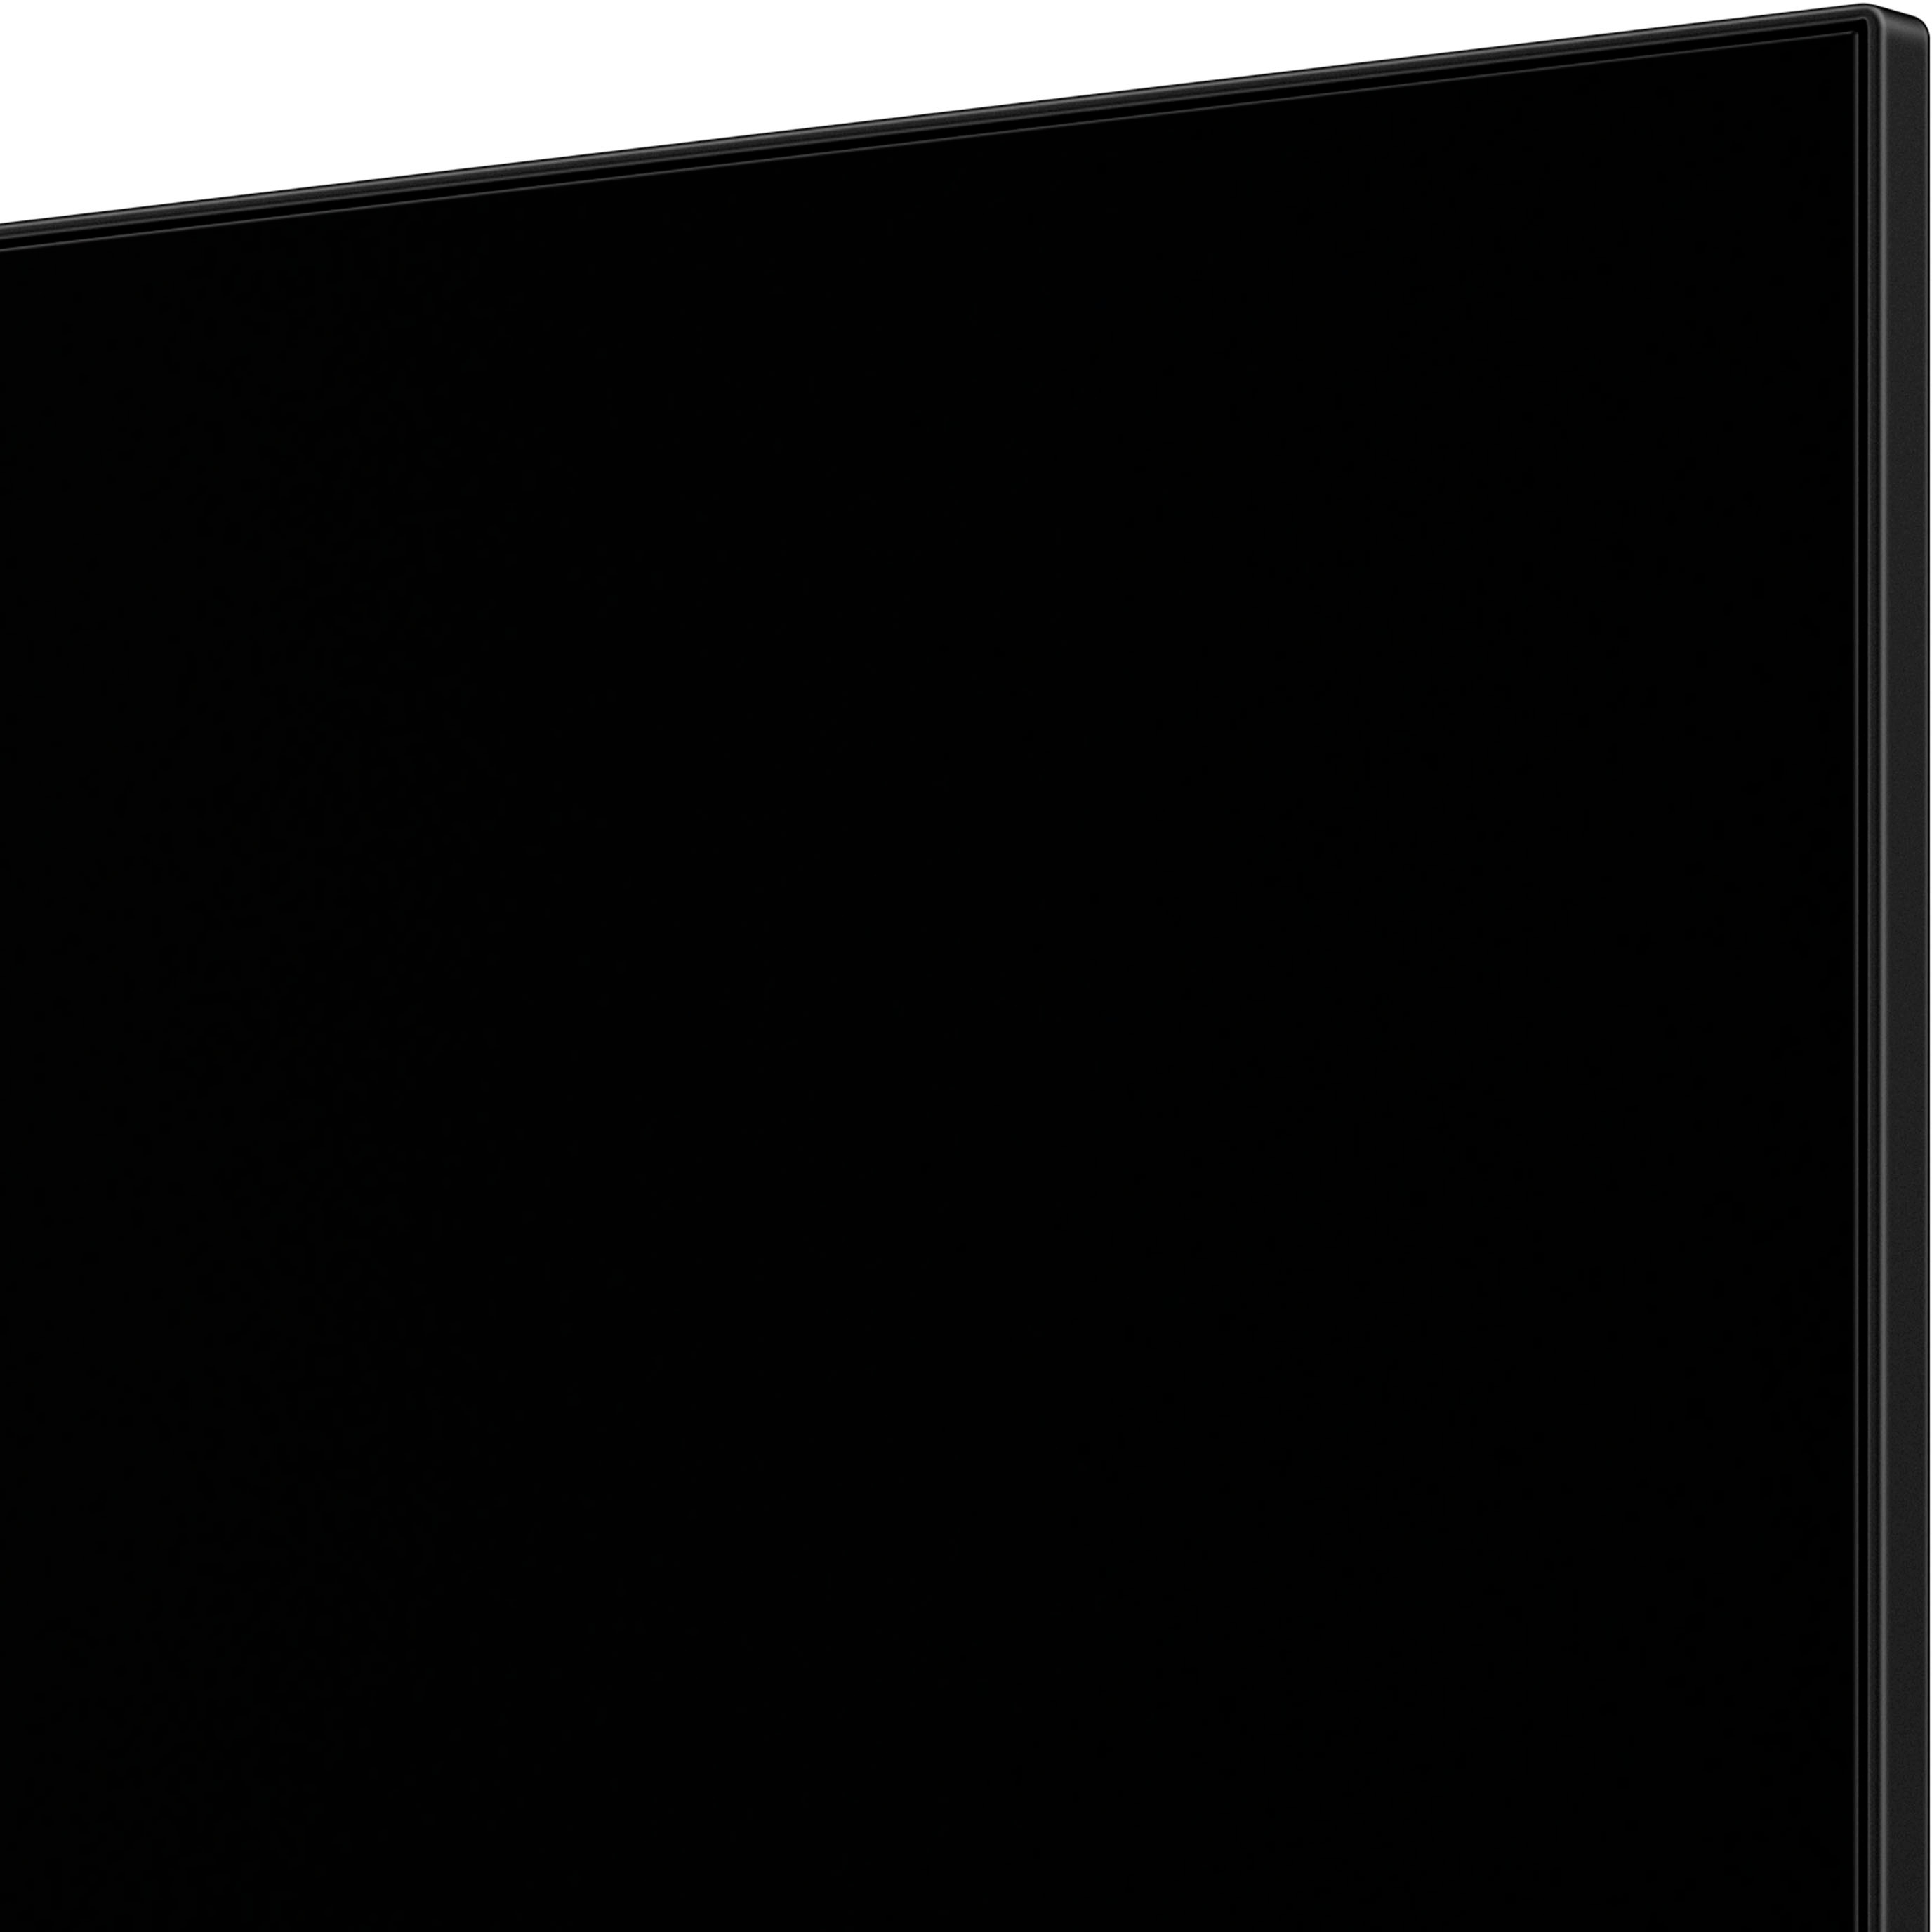 98 Class (97.5 Diagonal) UHD 4K Smart 3D LED TV w/ webOS™